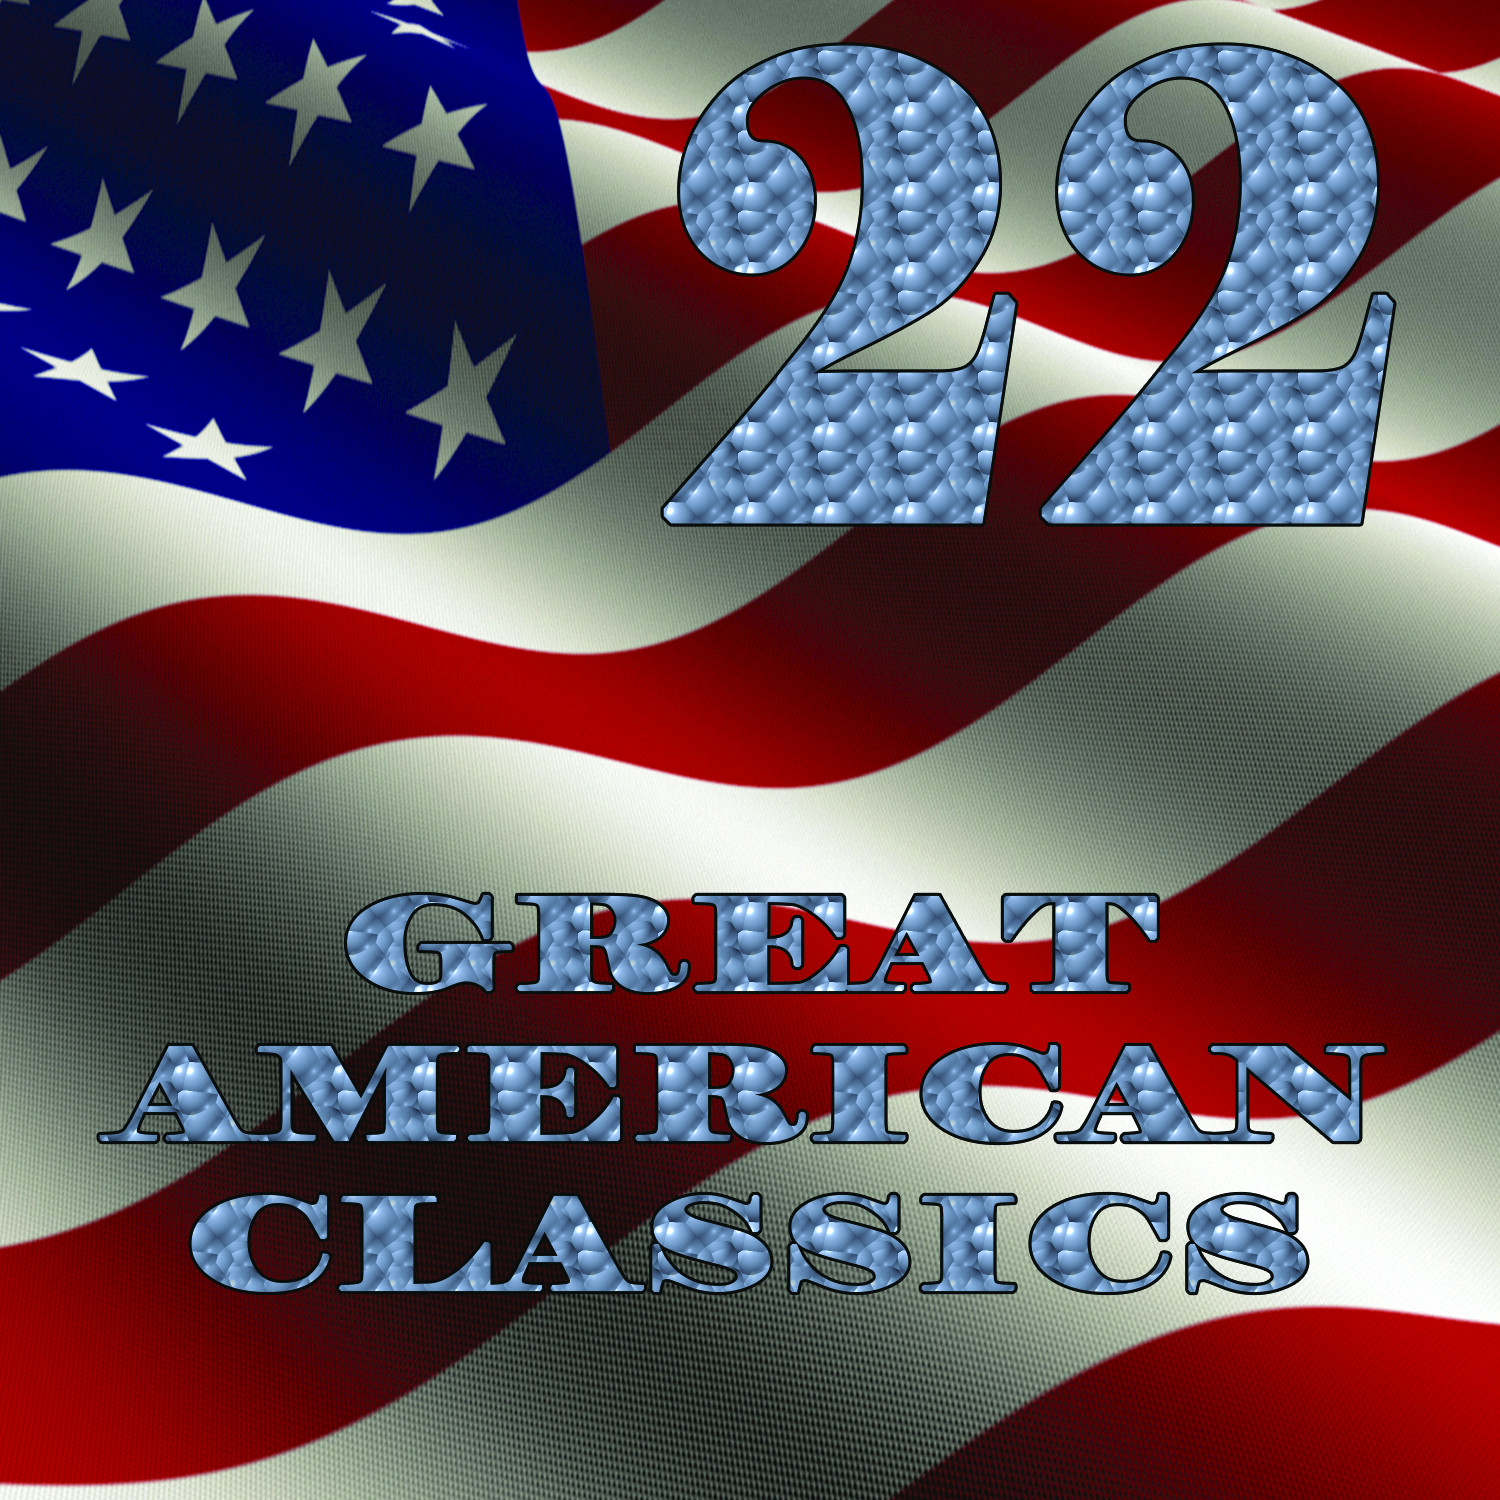 22 Great American Classics